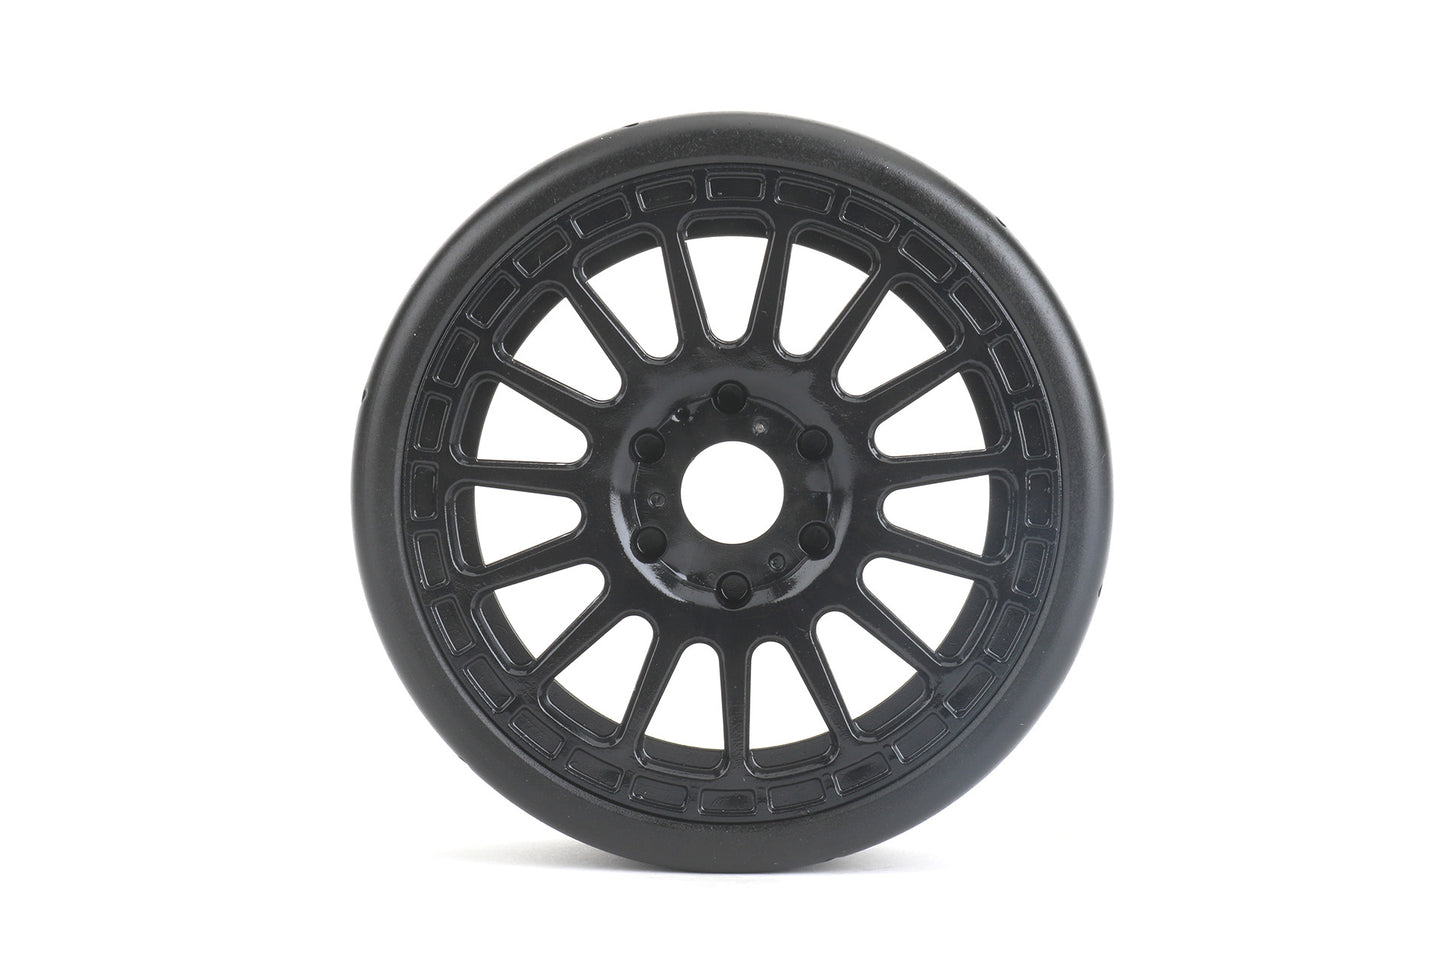 JETKO JKO1105RBMSGB  1/8 GT Quicker Racing Tires Mounted on Black Radial Rims, Medium Soft, Belted